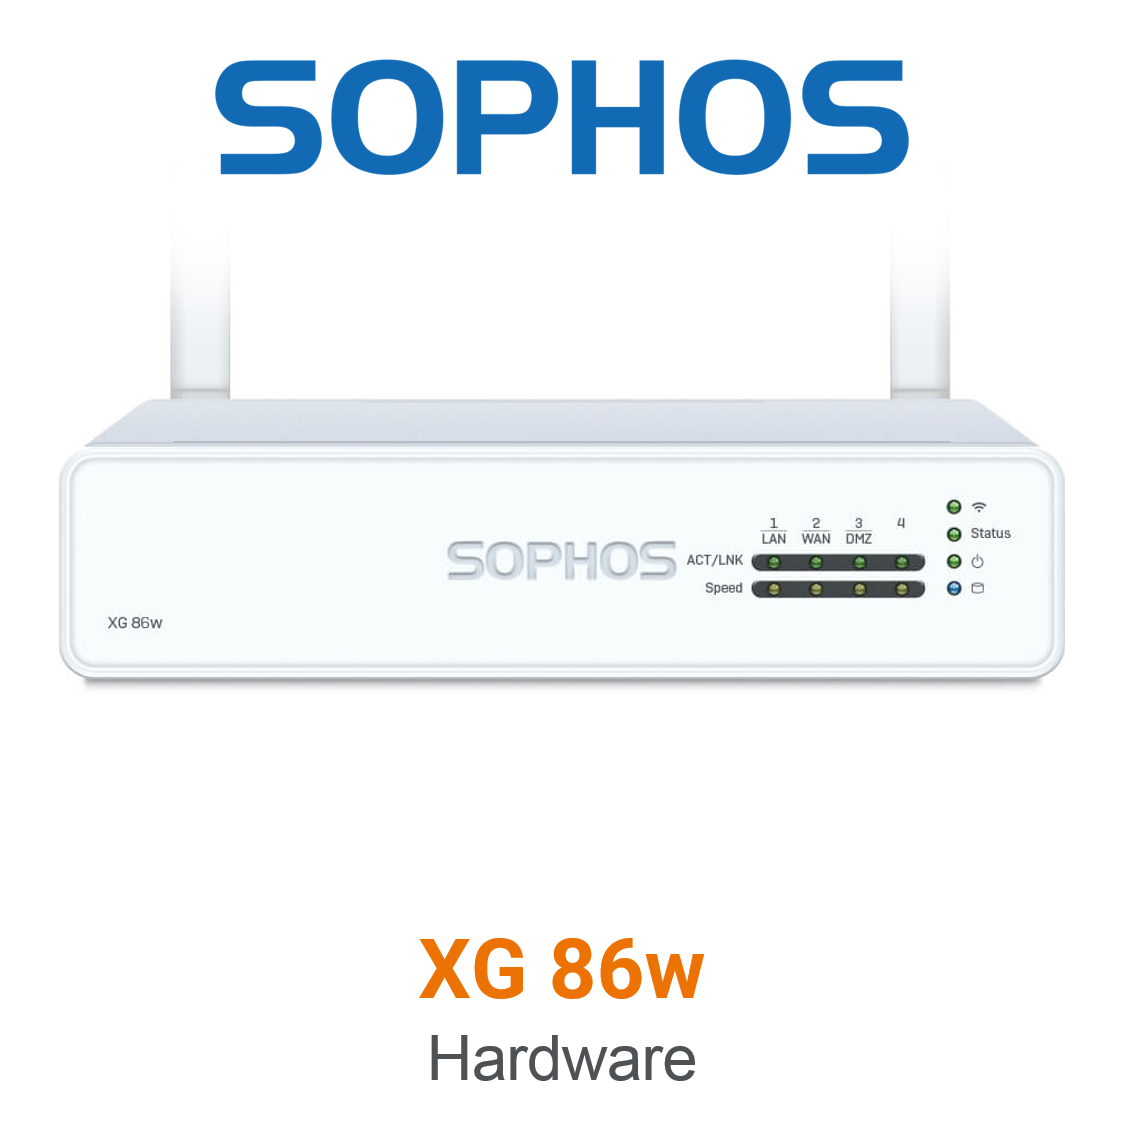 Sophos XG 86w Security Appliance